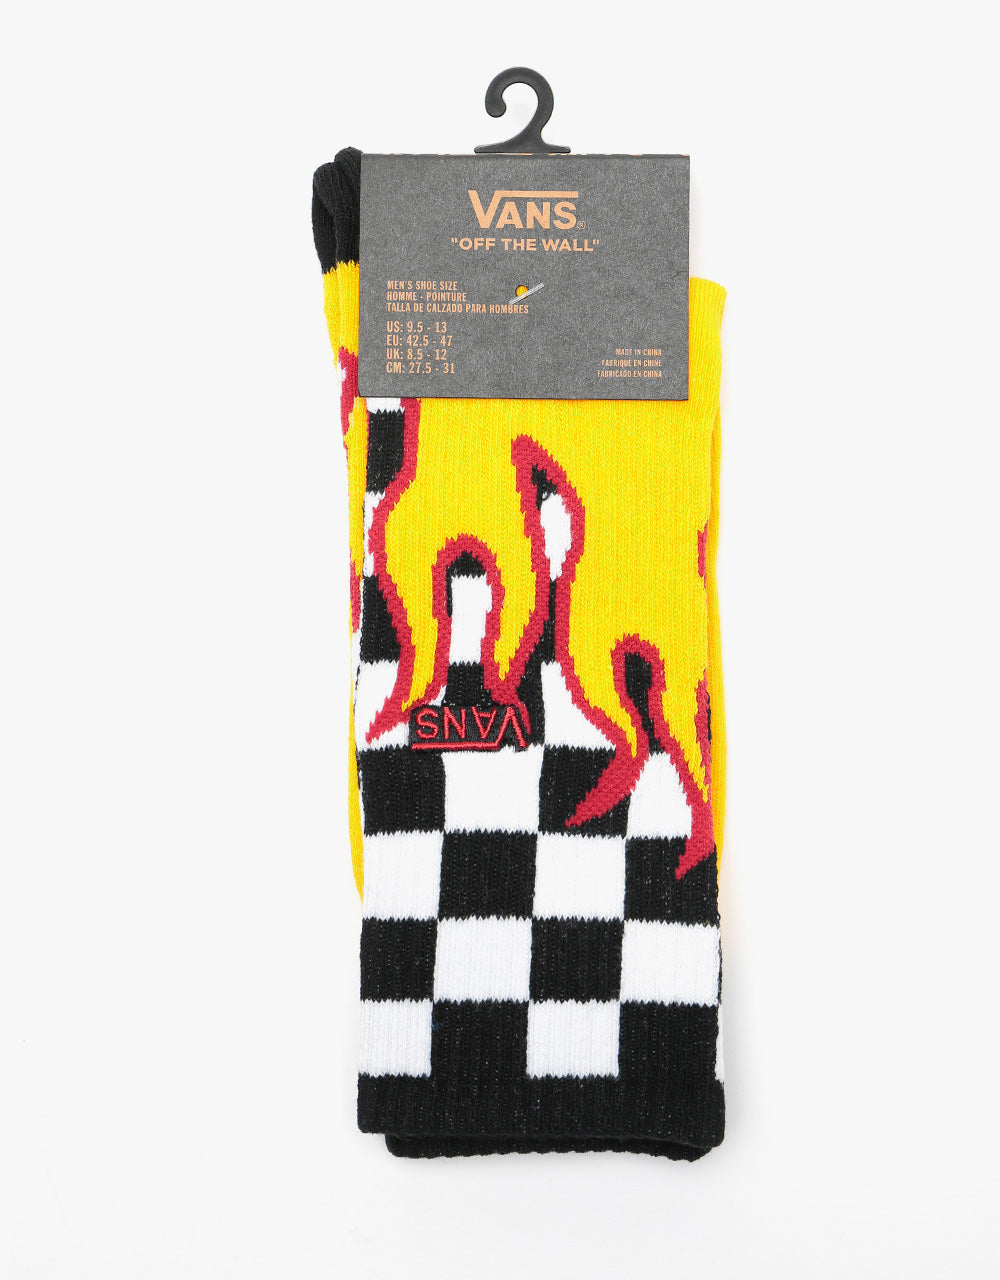 Vans Flame Check Crew Socks - Black/White Check/Flame